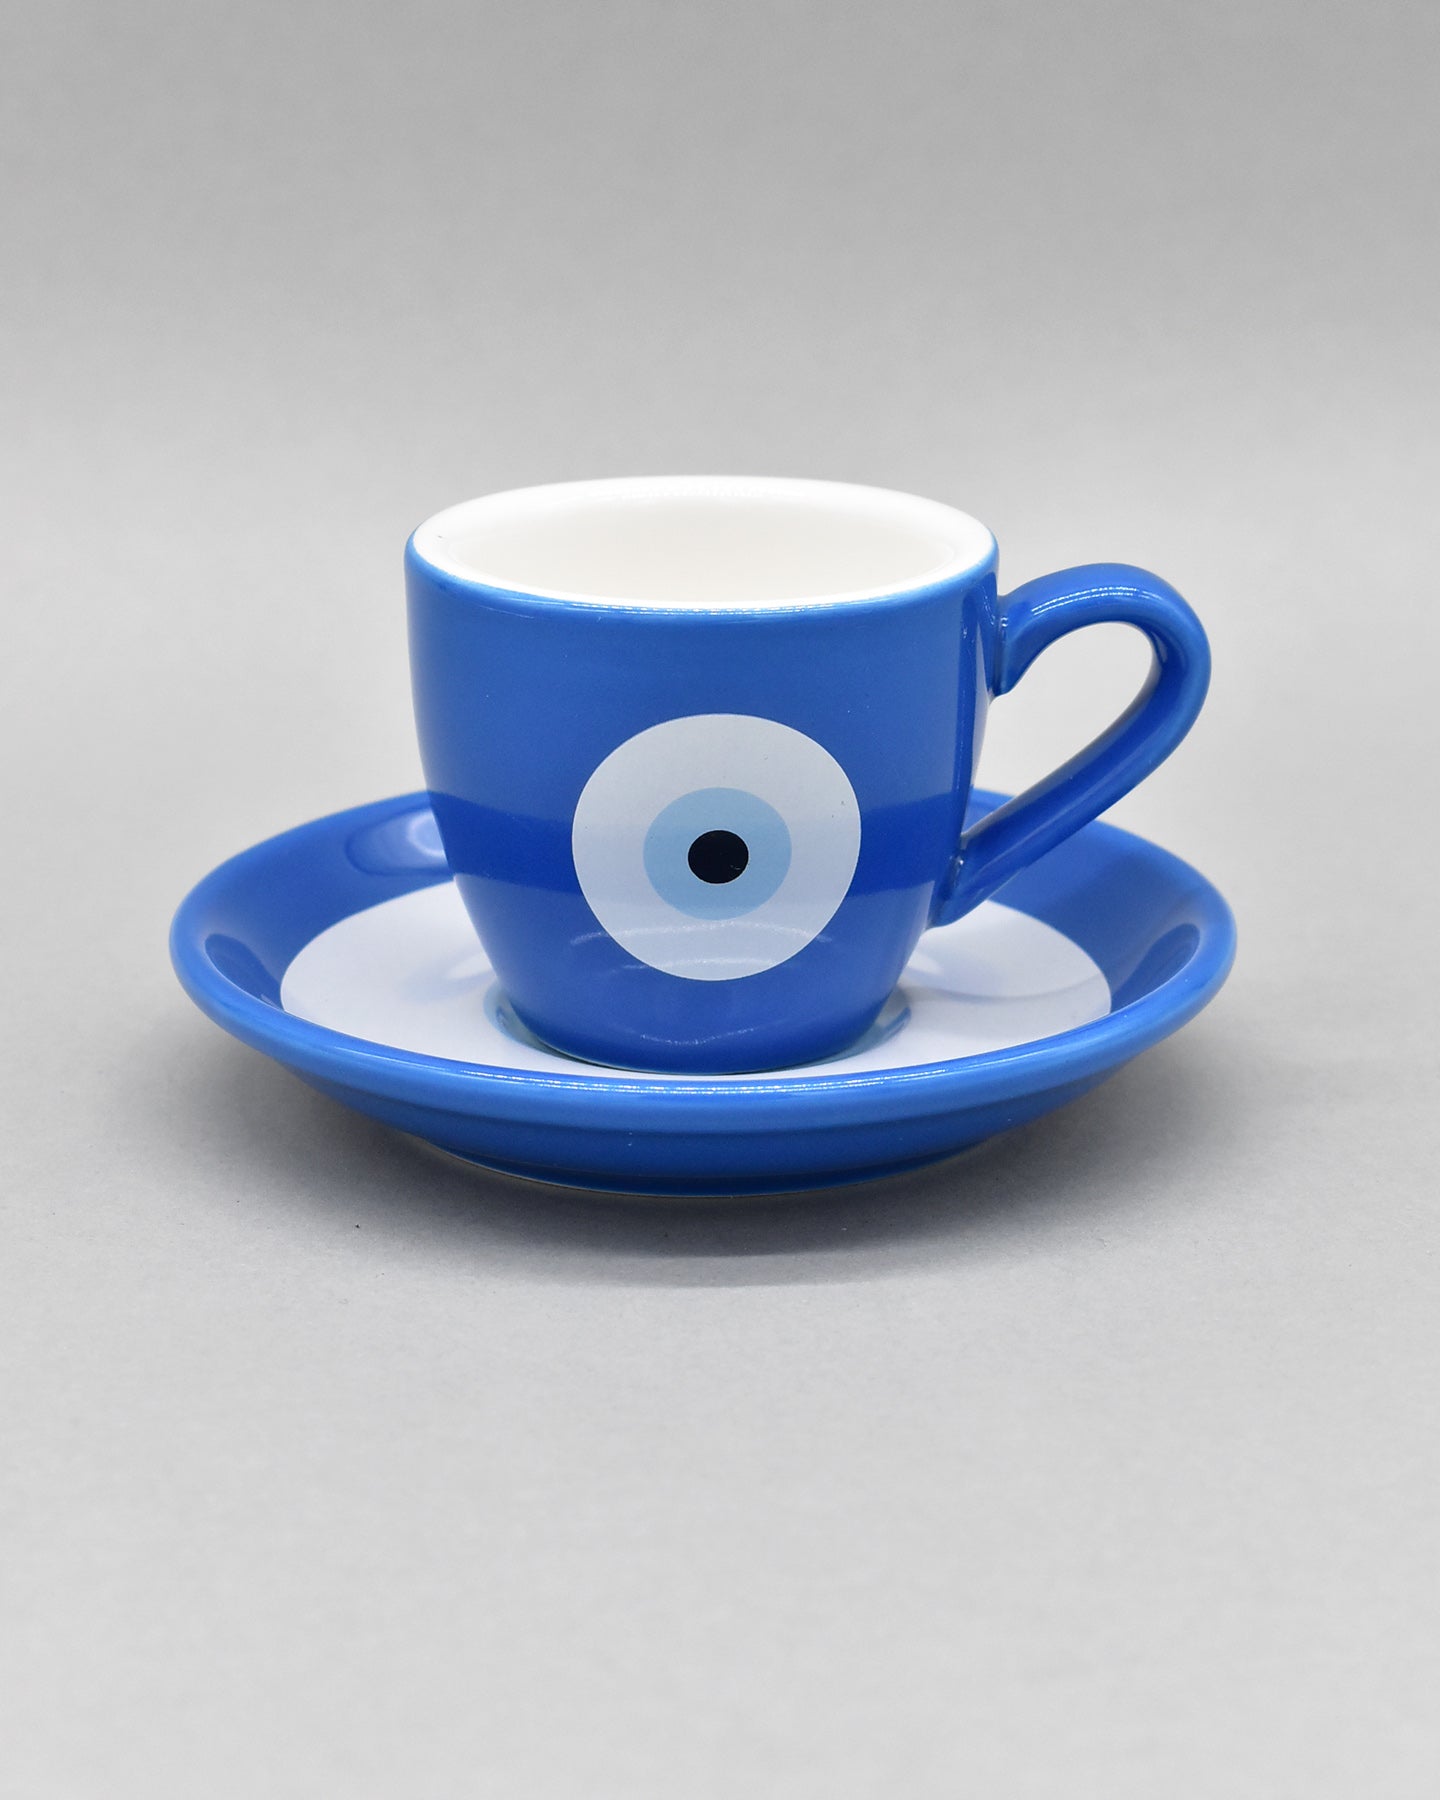 Handmade Ceramic Espresso Cup With Gold Crescent & Blue Evil Eye